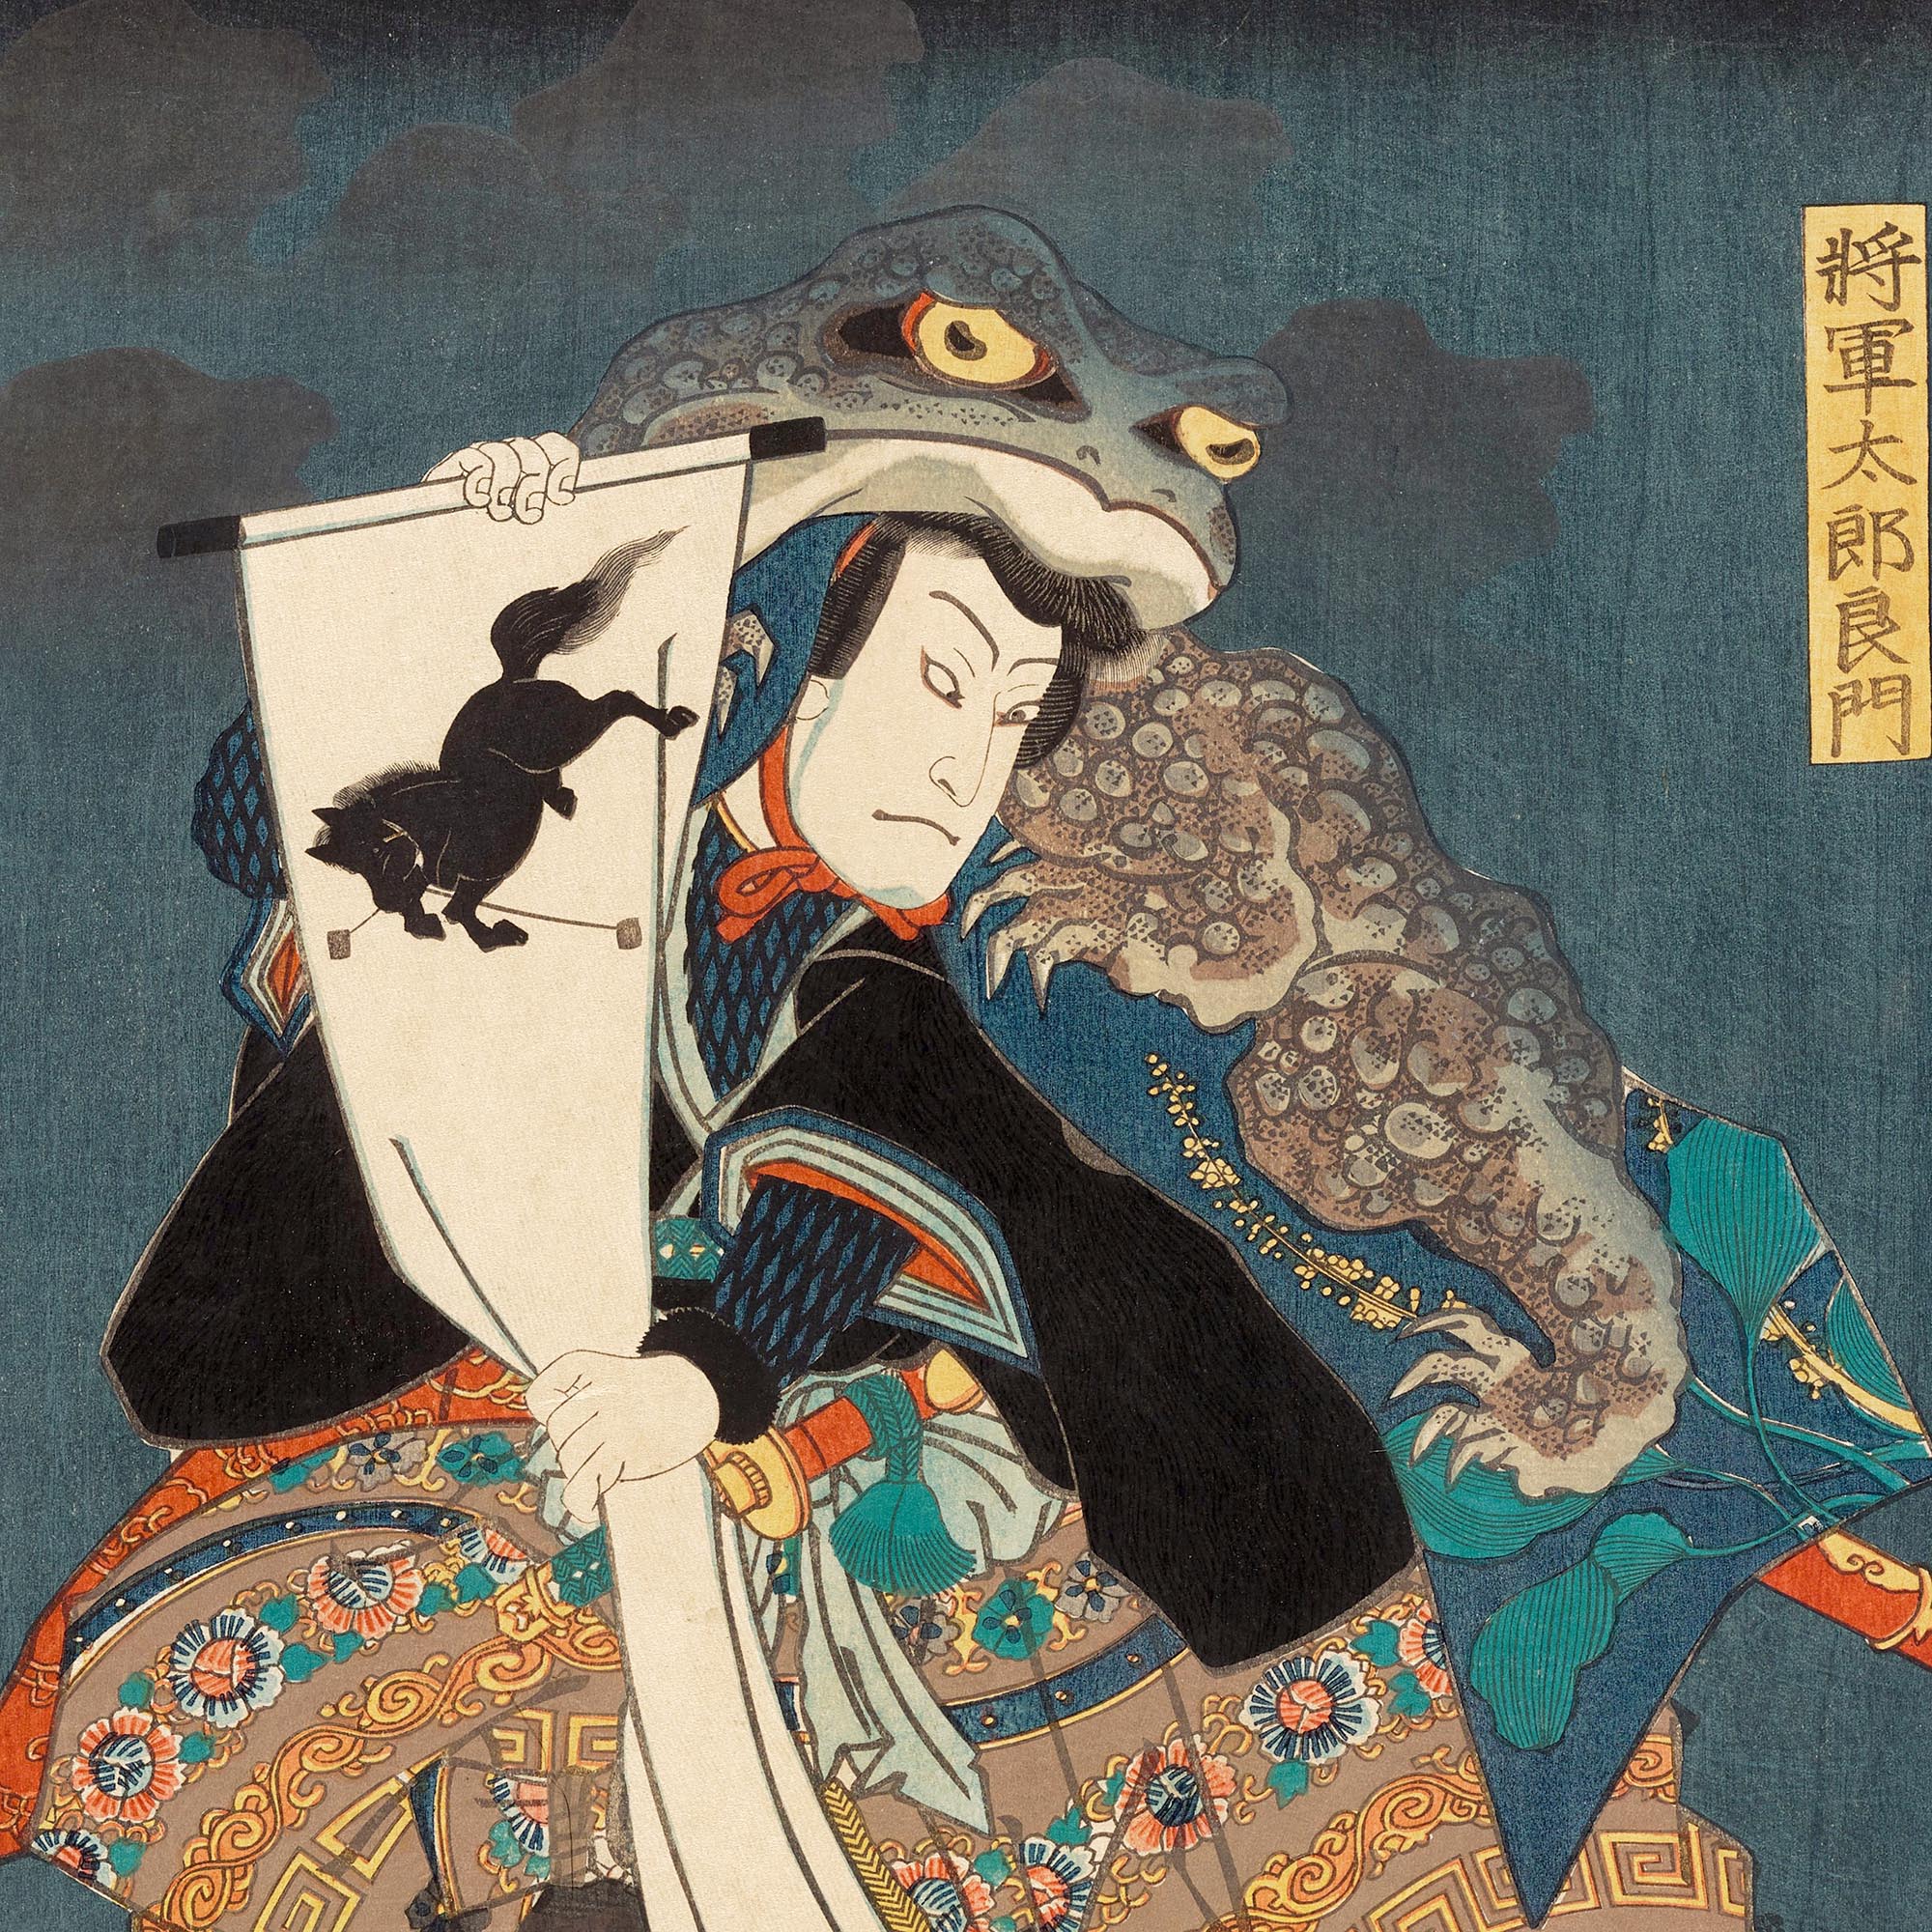 T-shirt Supernatural Toad Shōgun Tarō Yoshikado | Toad Samurai, Frog Ronin, Japanese Warrior Ukiyo-e Graphic Art T-Shirt